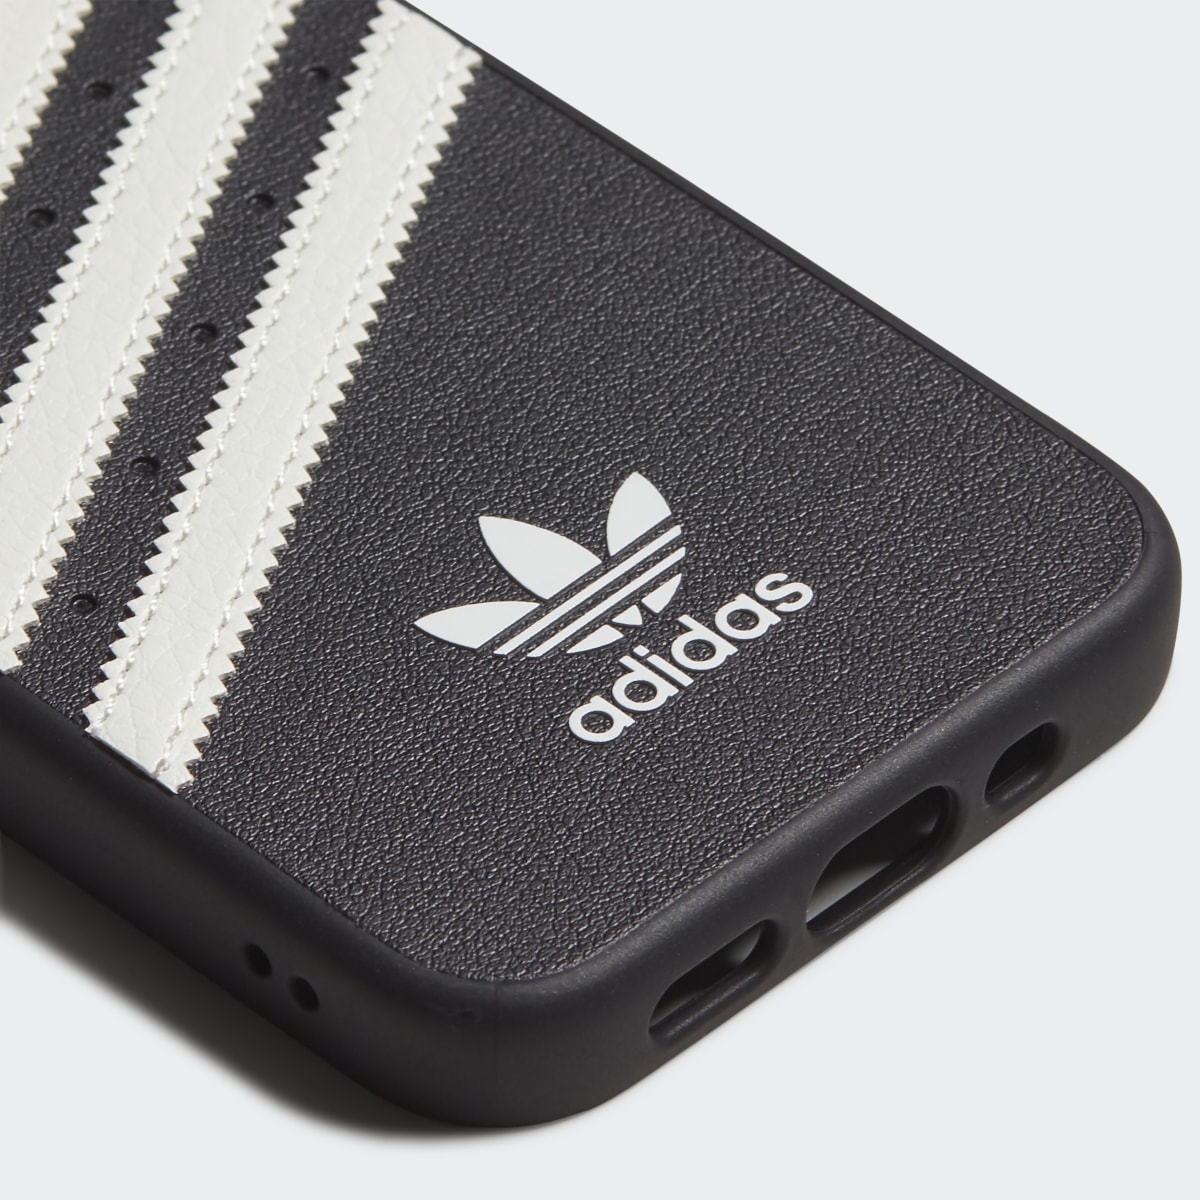 Adidas Moulded Samba for iPhone 12 mini. 4